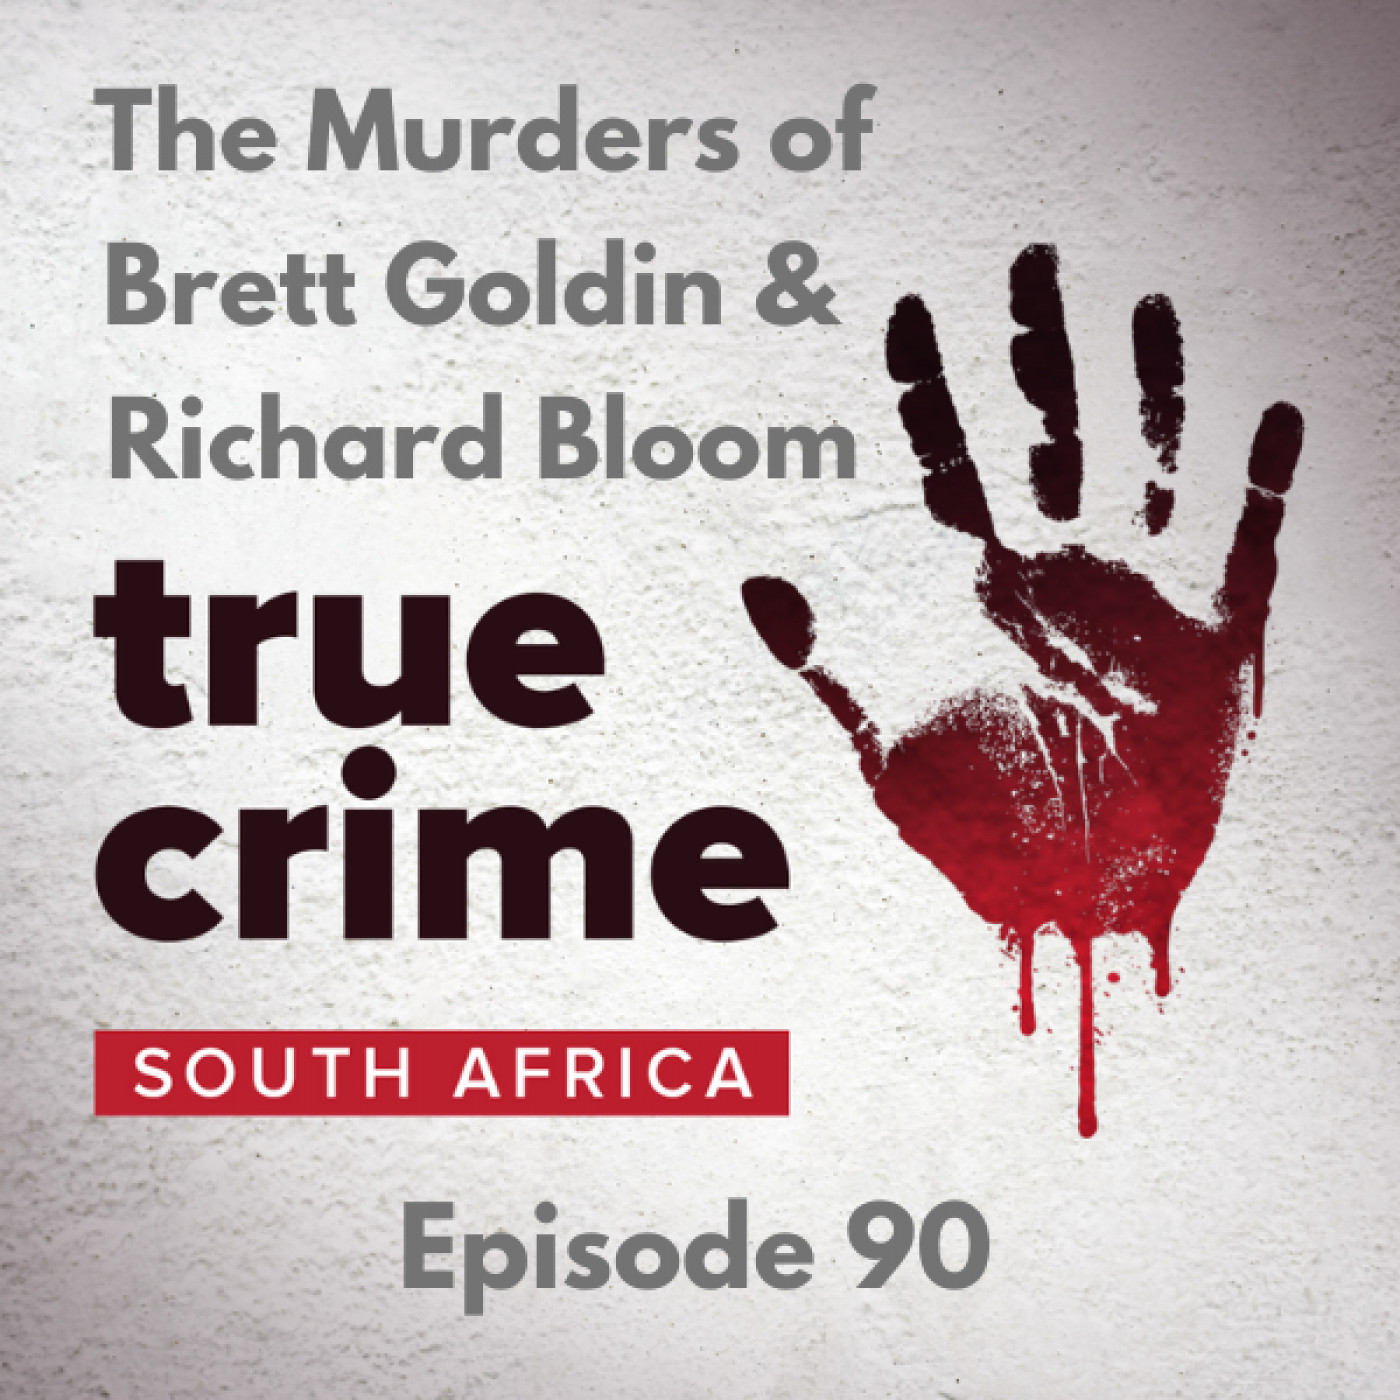 Episode 90 - The Murders of Brett Goldin & Richard Bloom